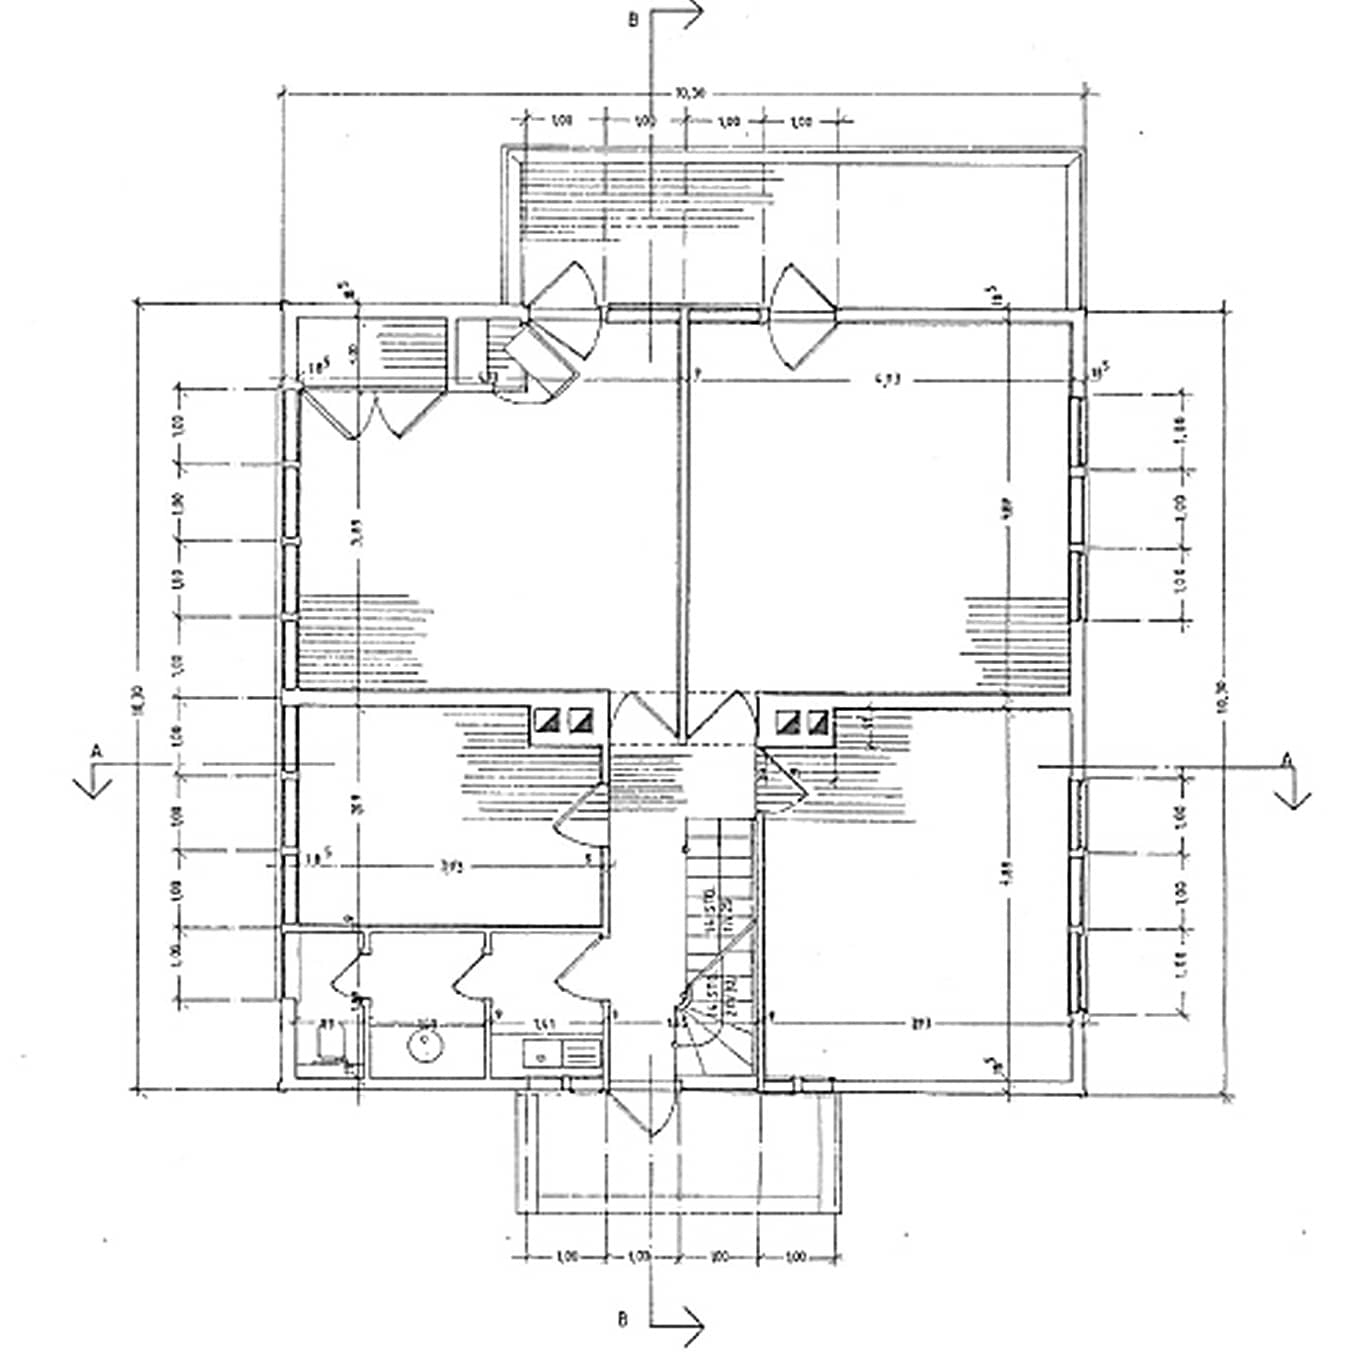 Plan of the “Neufert House” - Upper floor layout